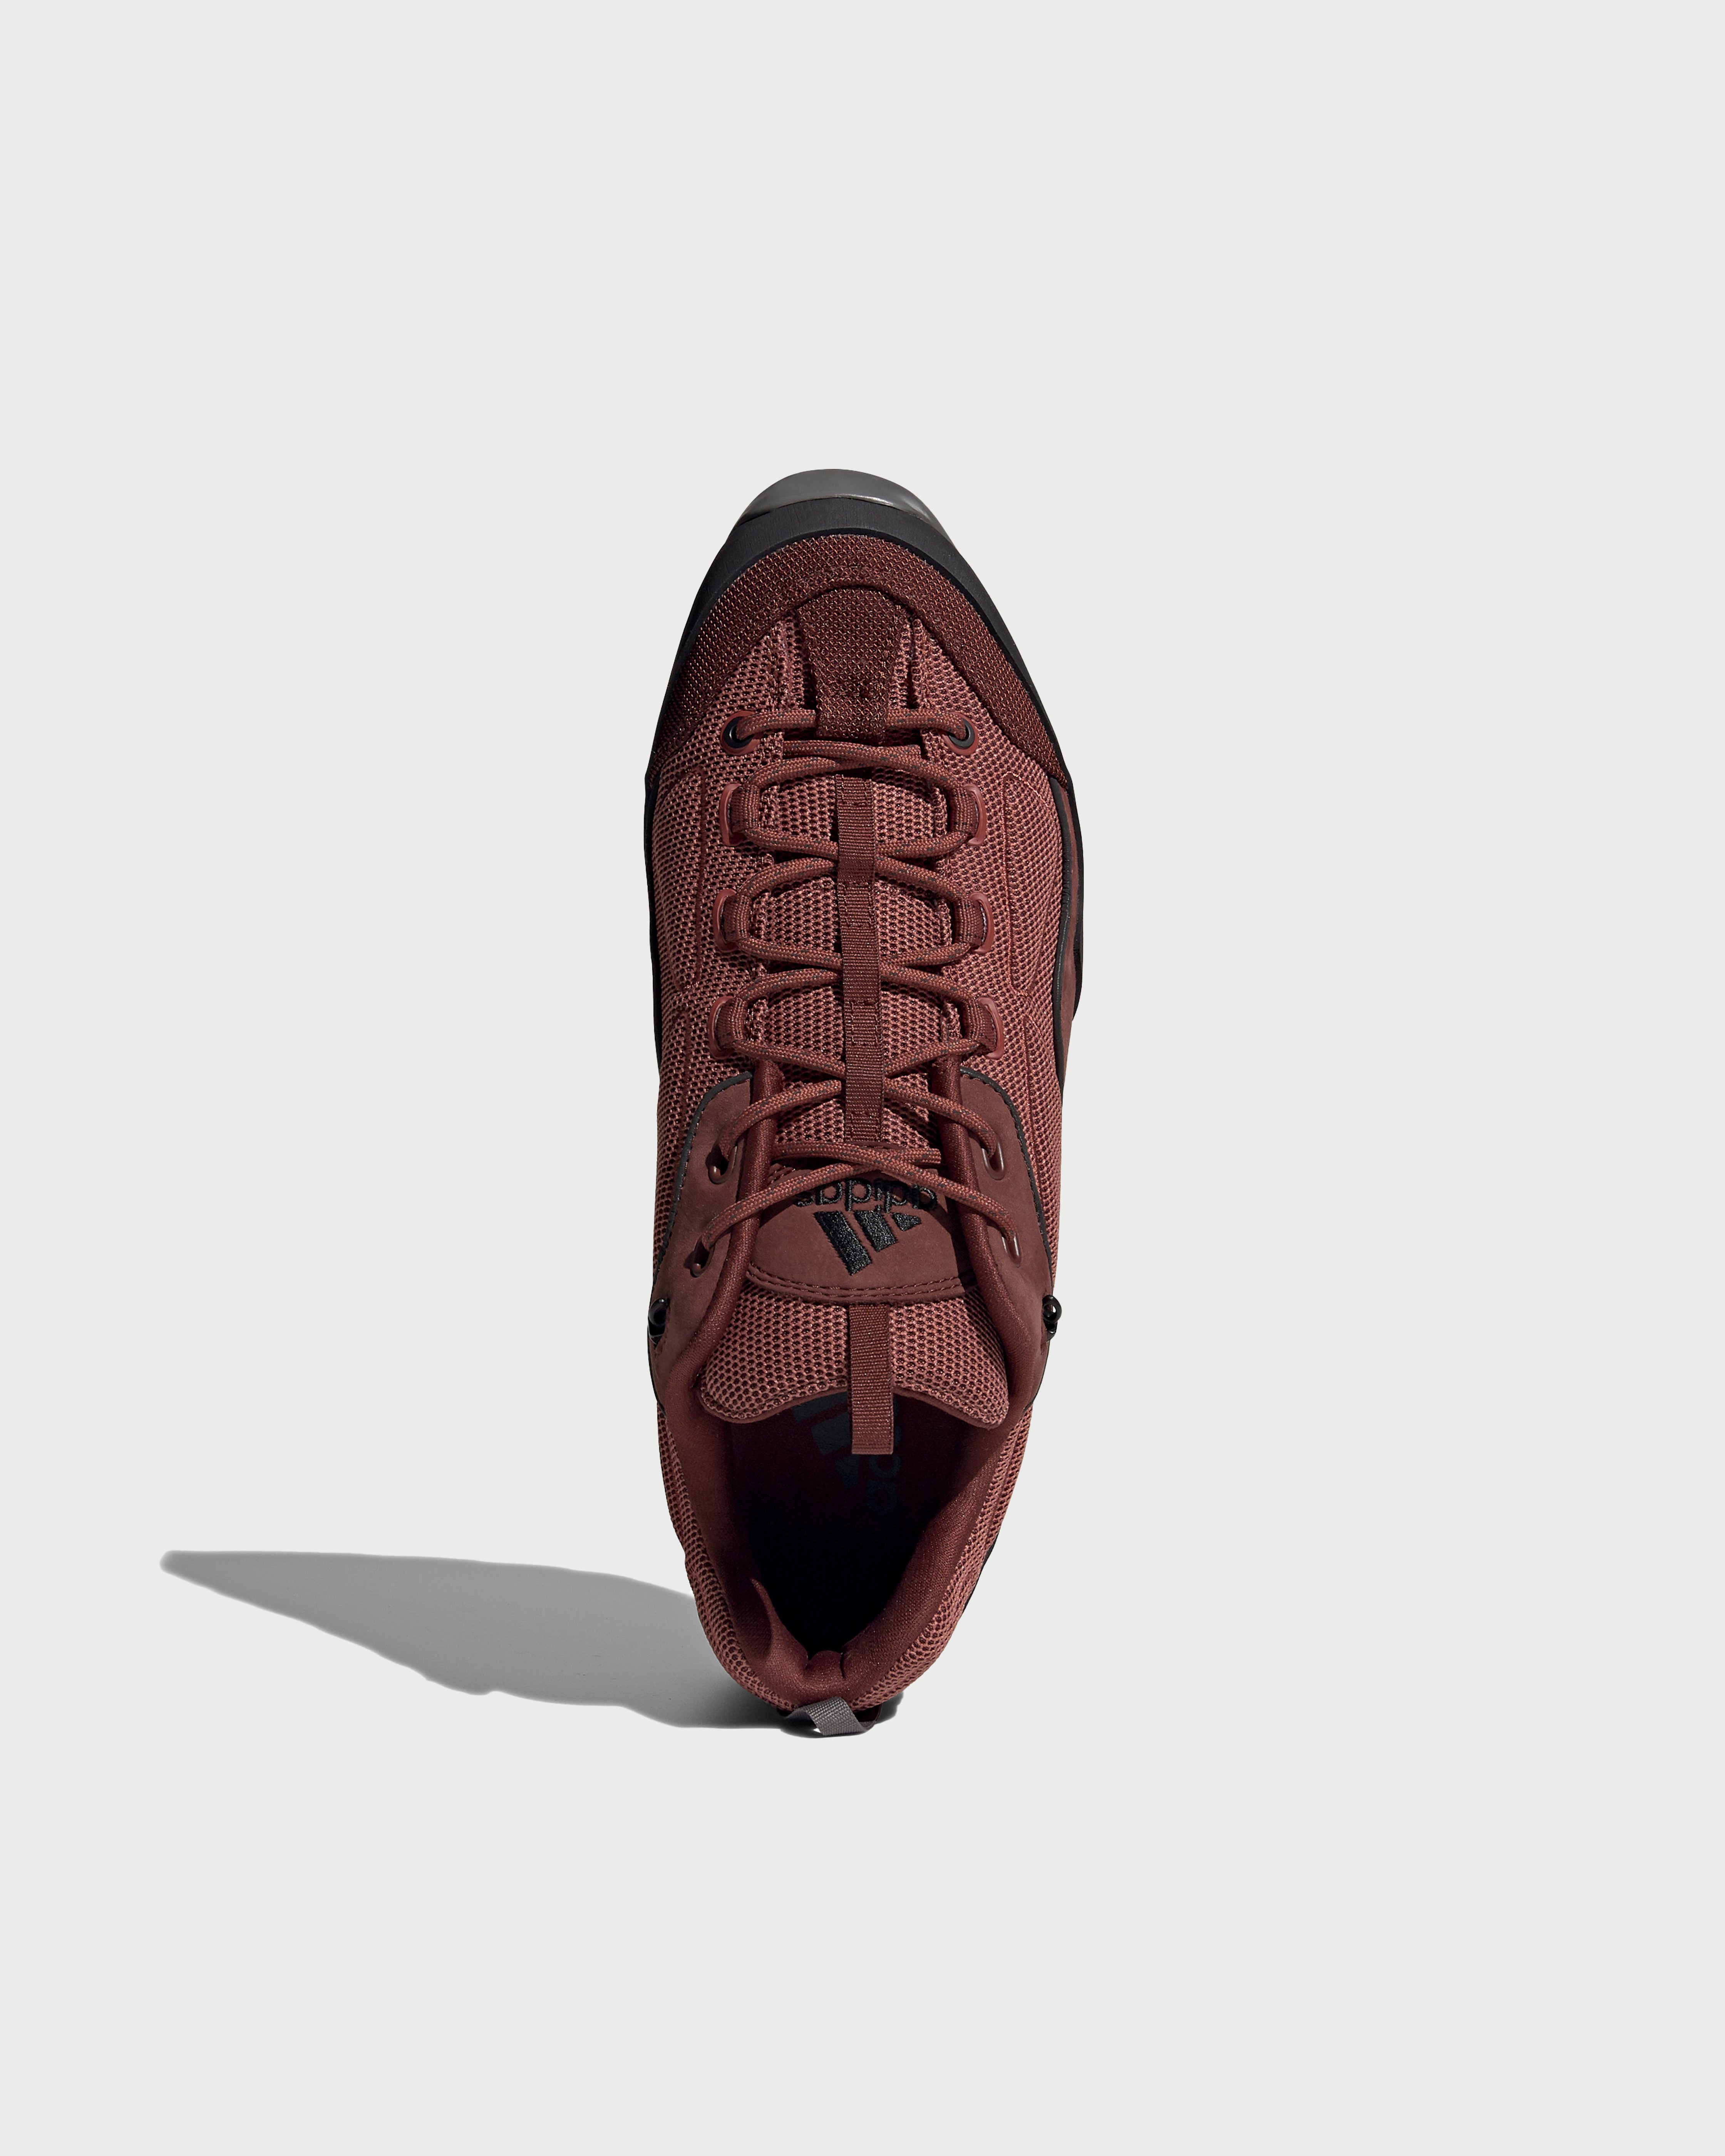 Adidas - Sahalex Brown - Footwear - Brown - Image 3